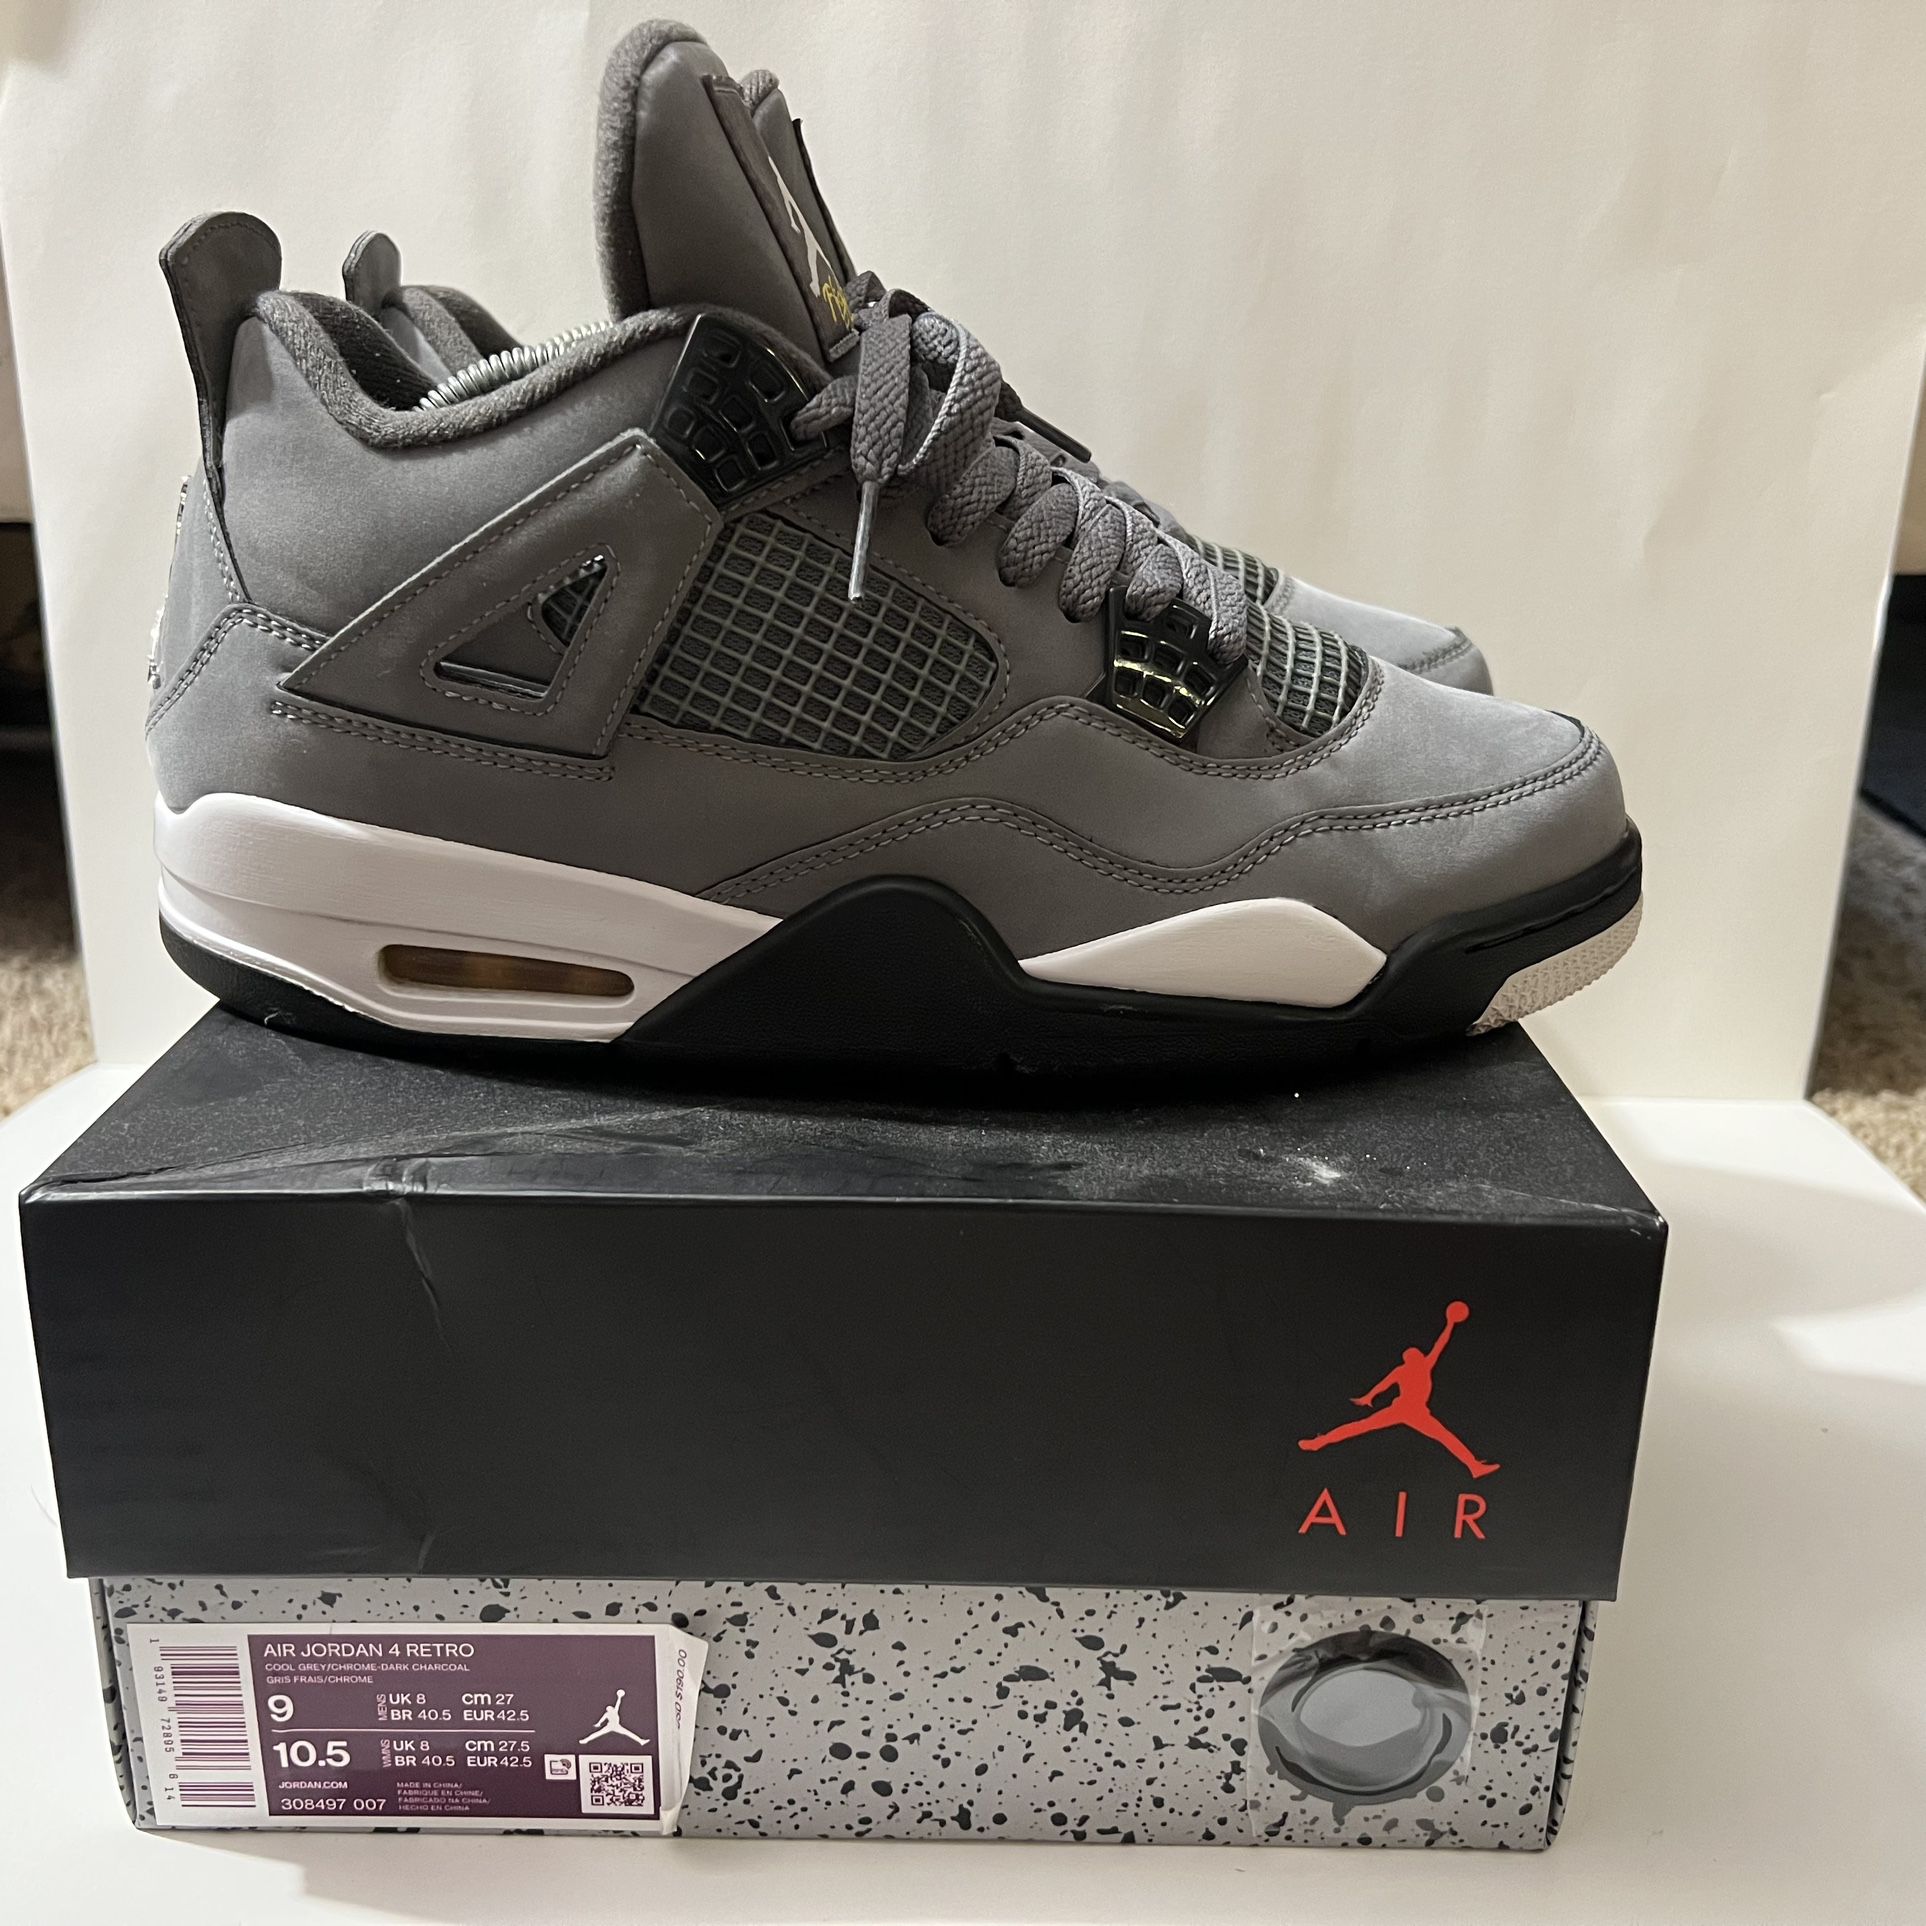 Jordan 4 Cool Grey Size 9